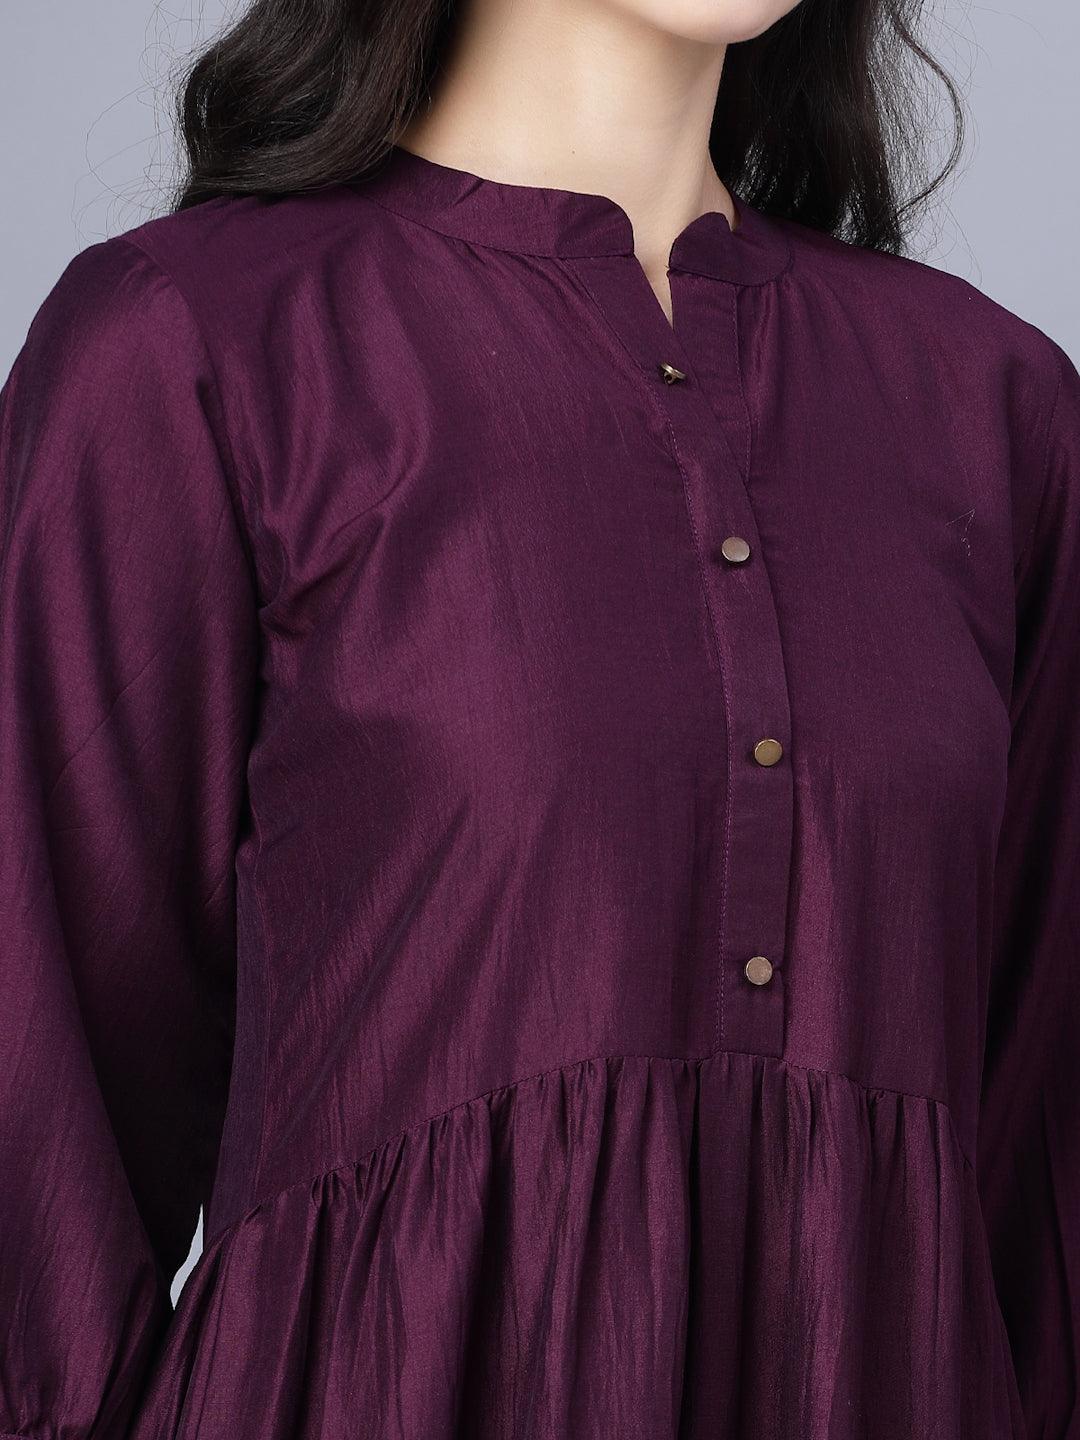 Women's Silk Solid 3/4 Sleeve V Neck Purple Women Dress - Myshka - Indiakreations